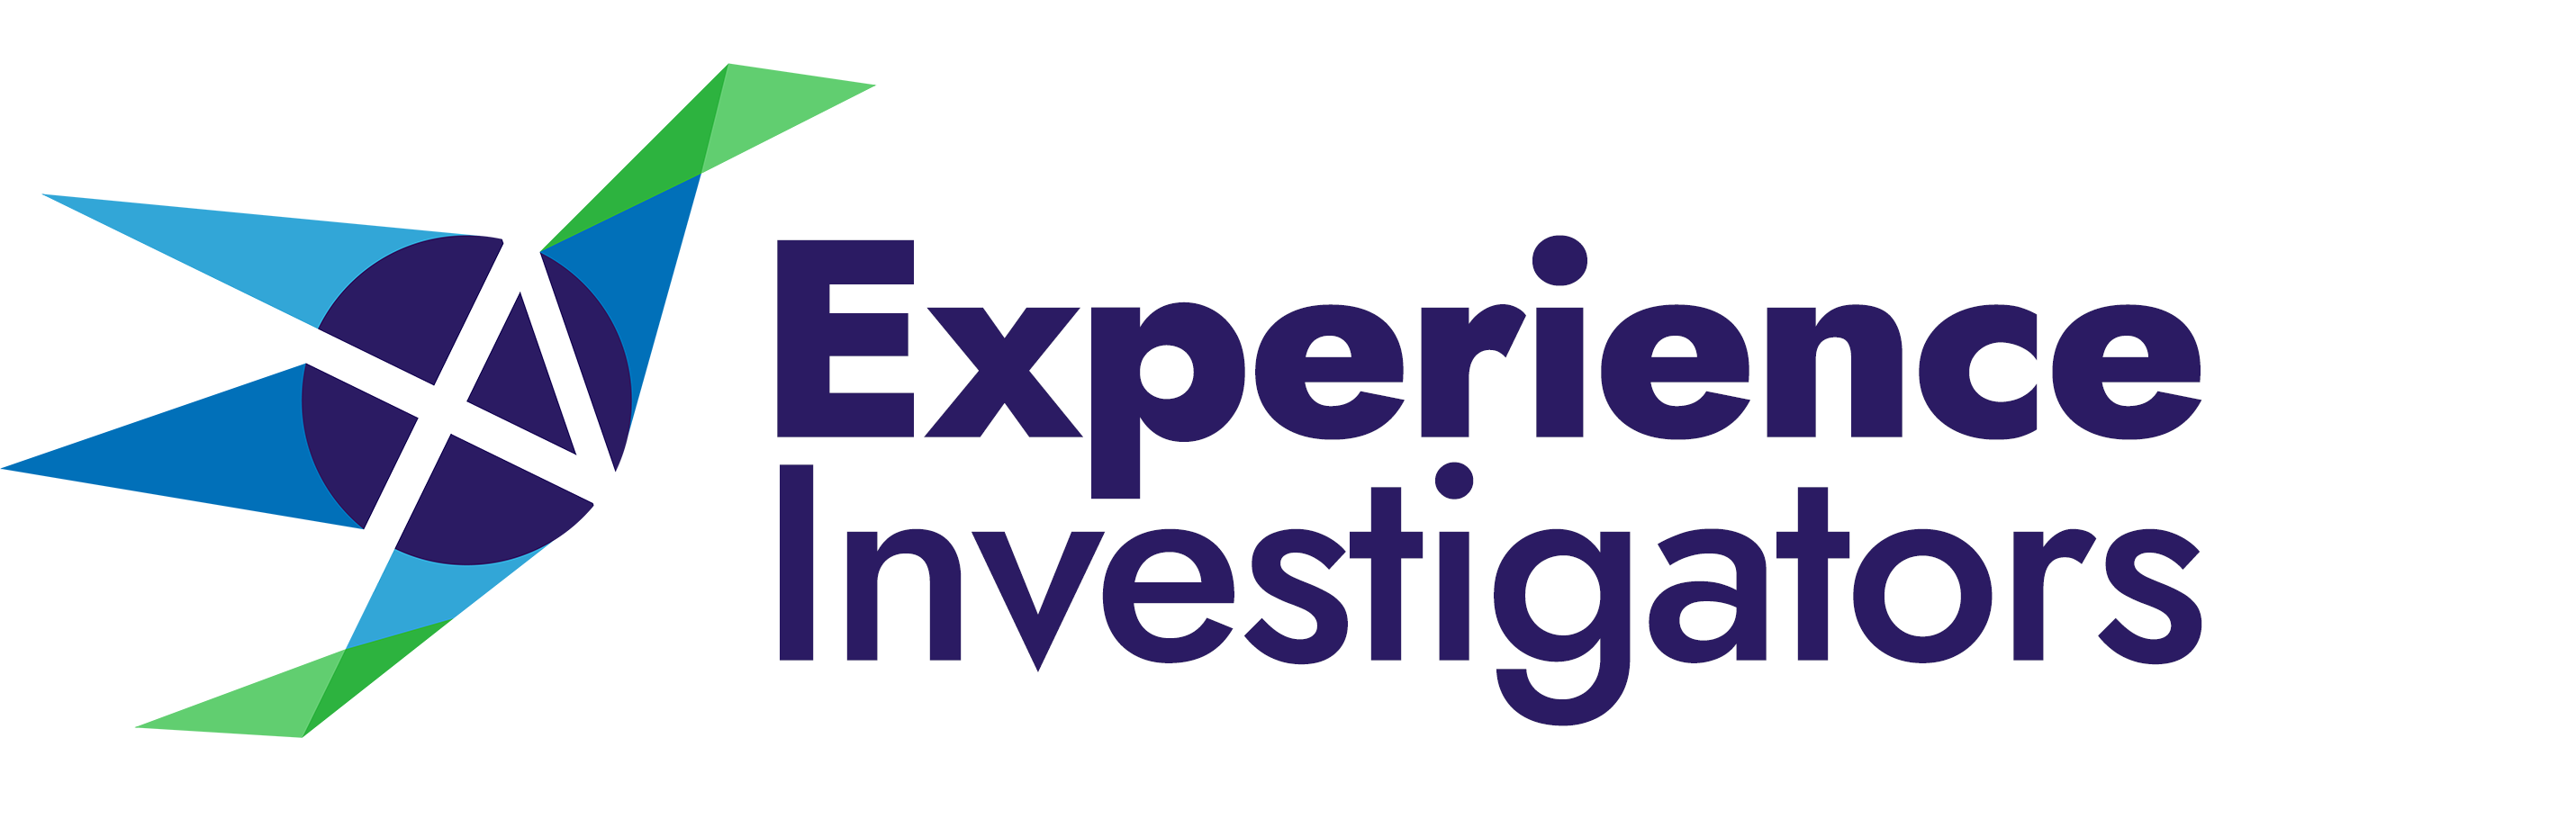 "Experience Investigators" crane logo